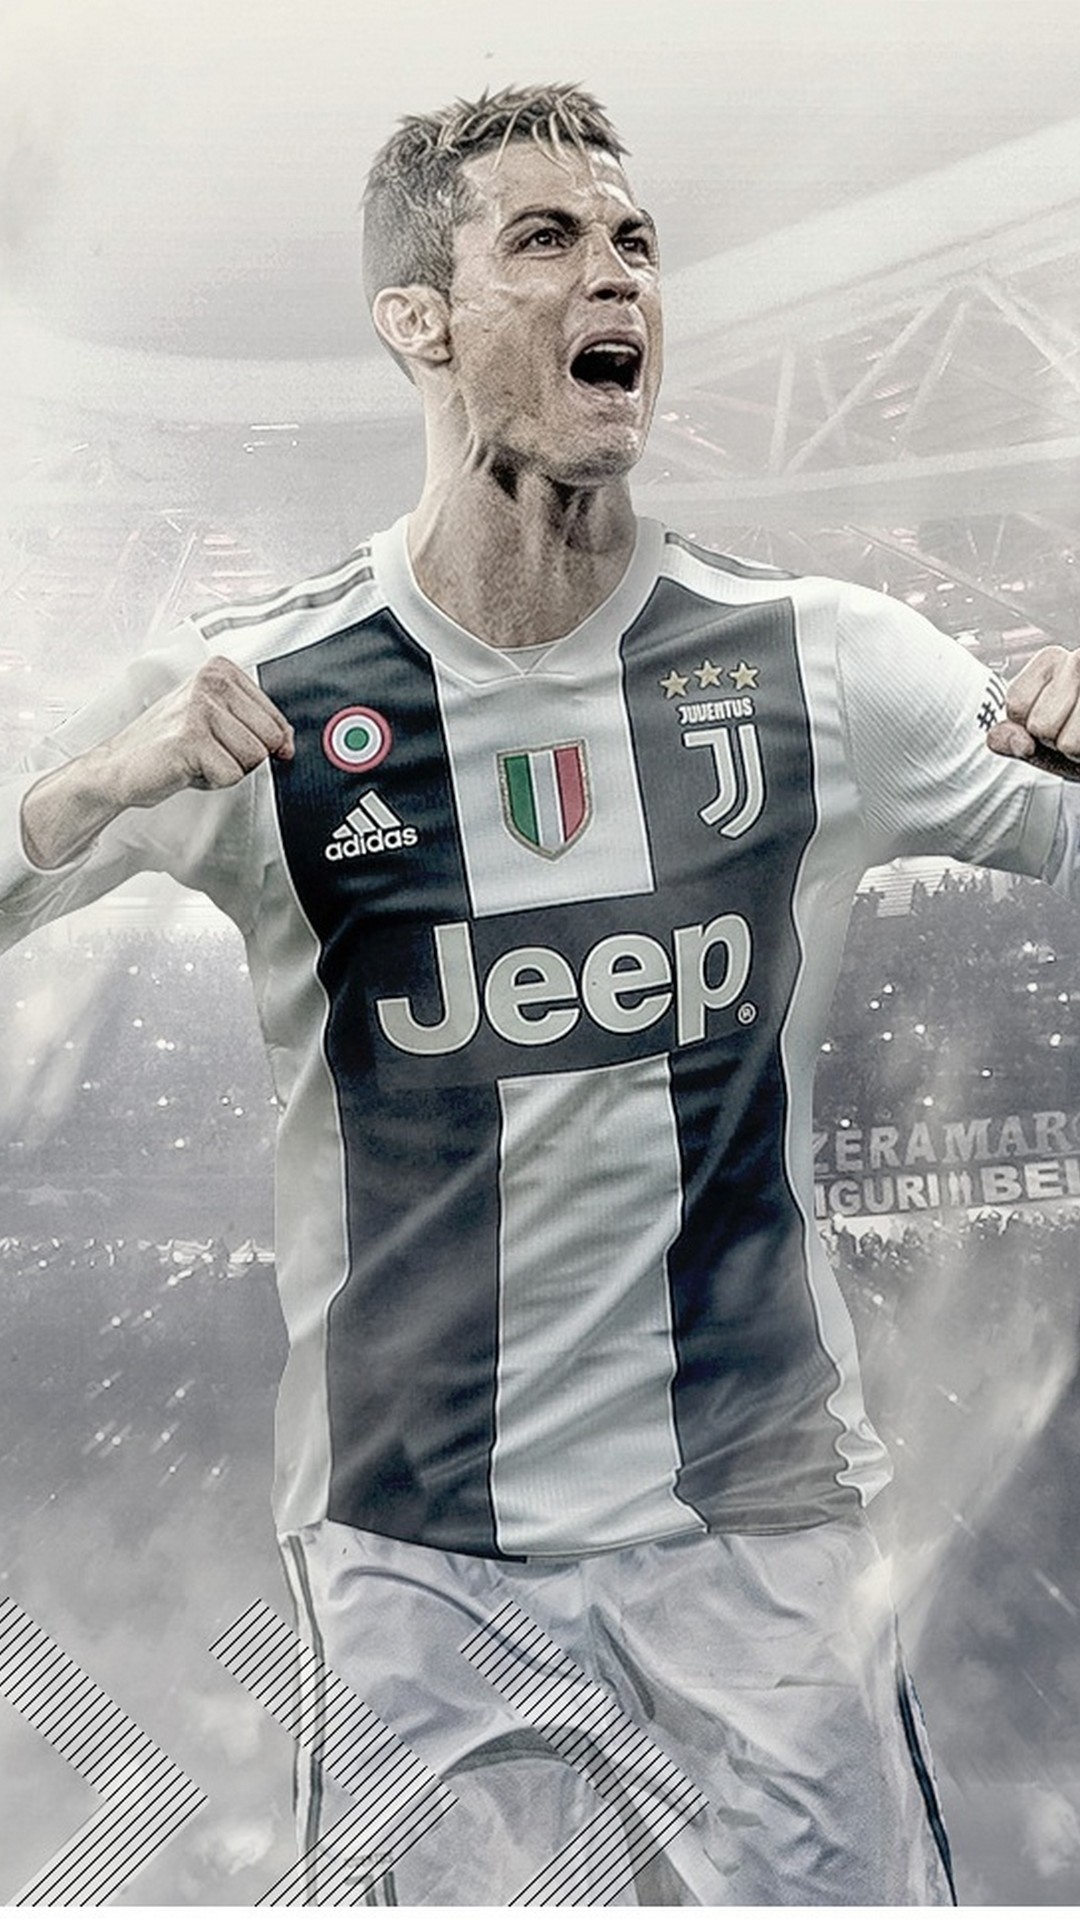 Wallpaper Android Cristiano Ronaldo Juventus Android Wallpapers